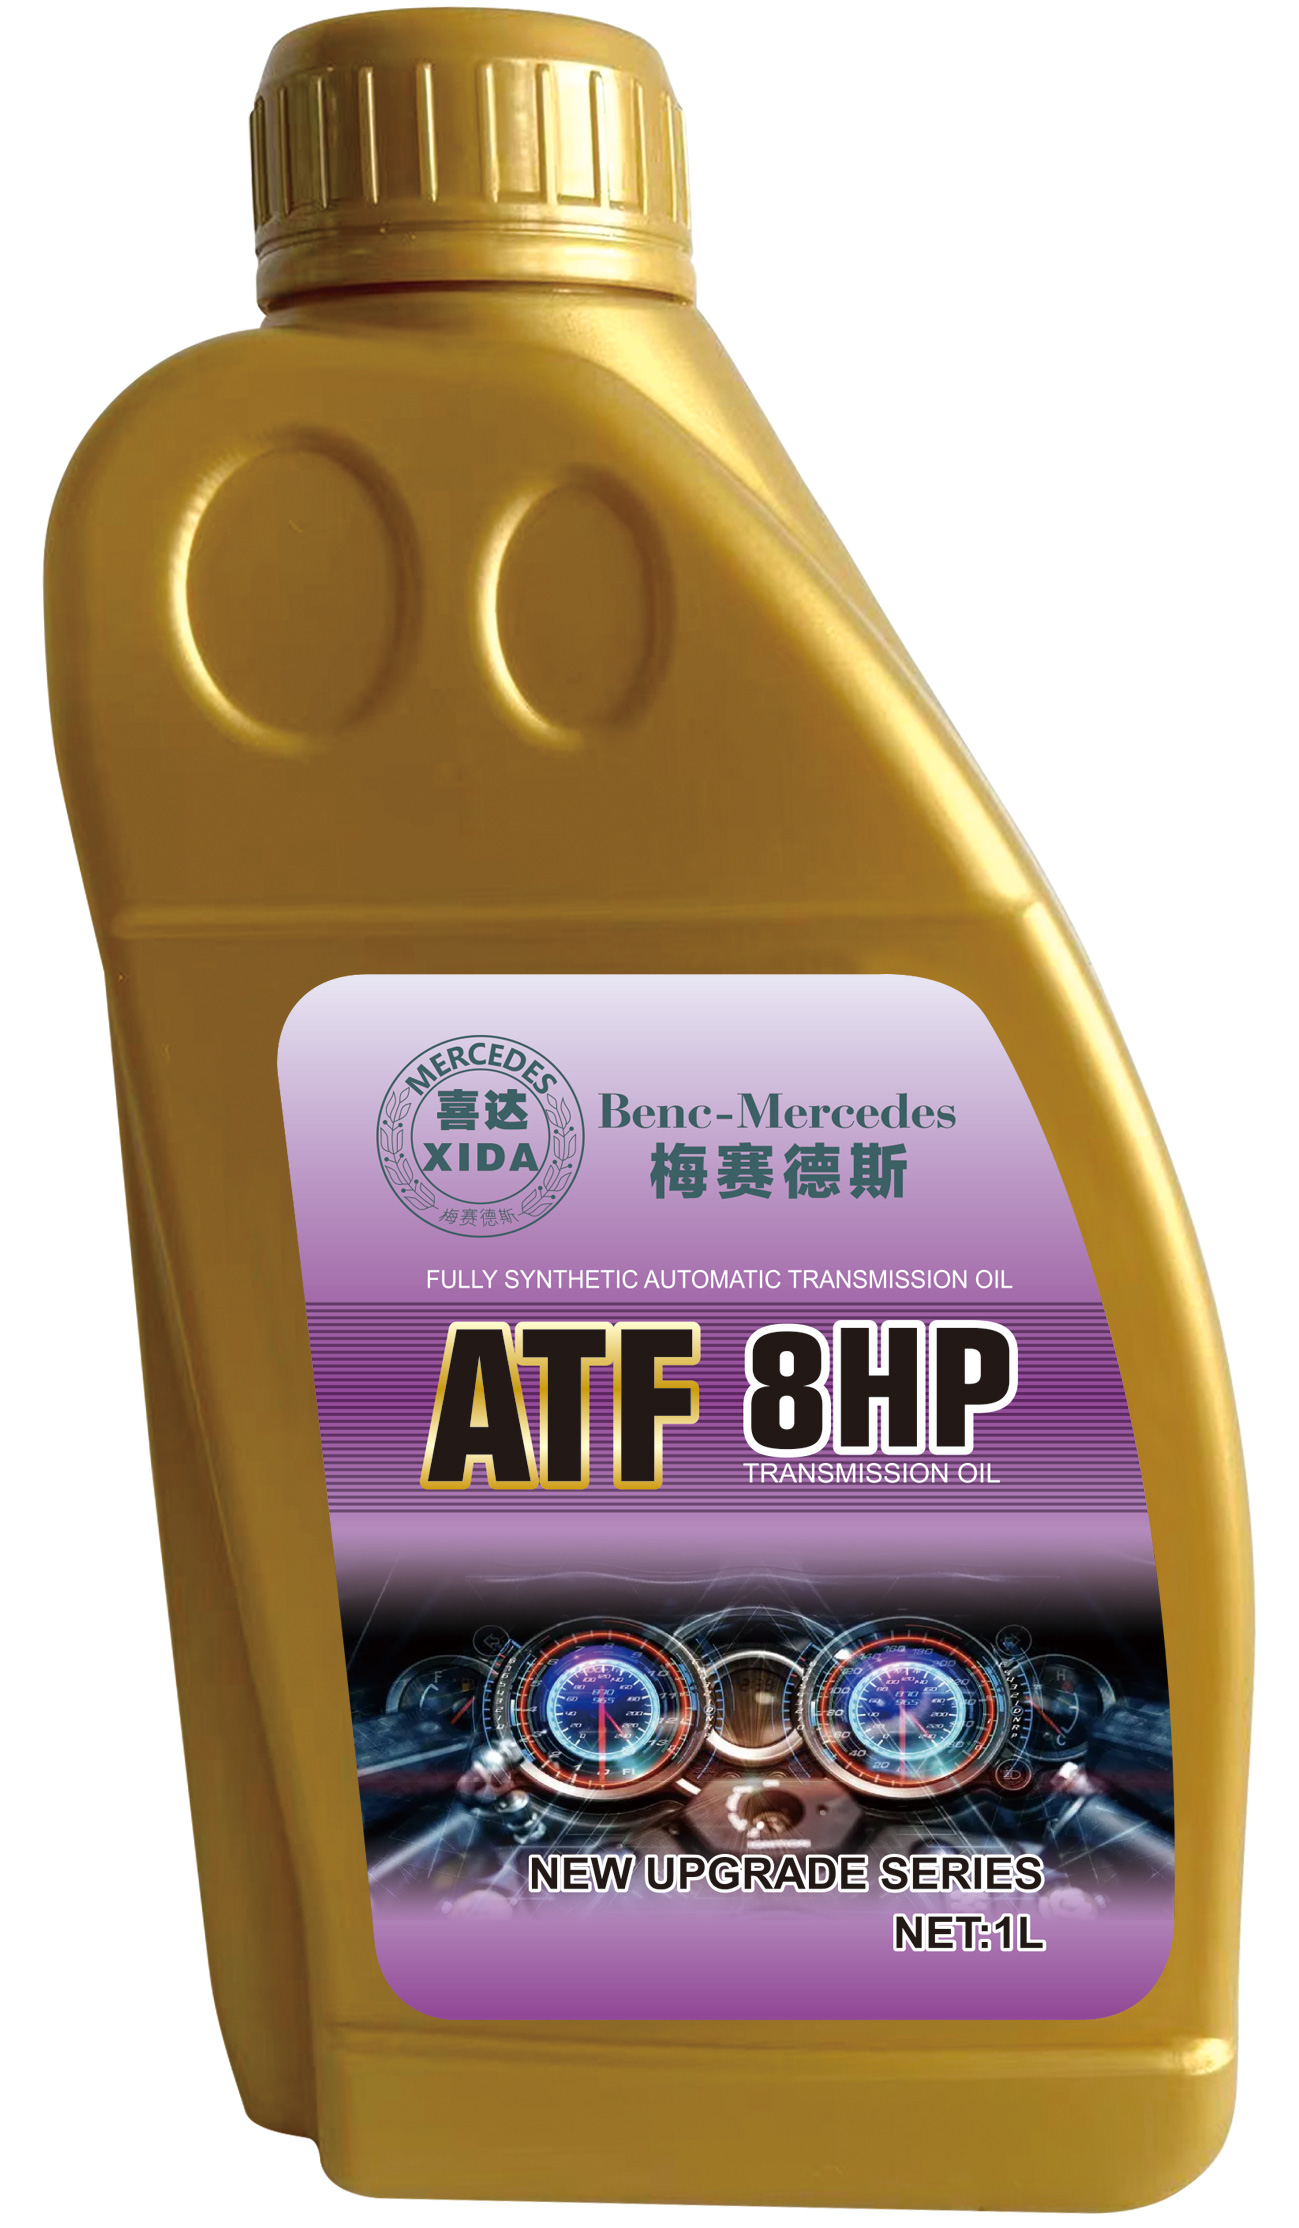 ATF-8HP